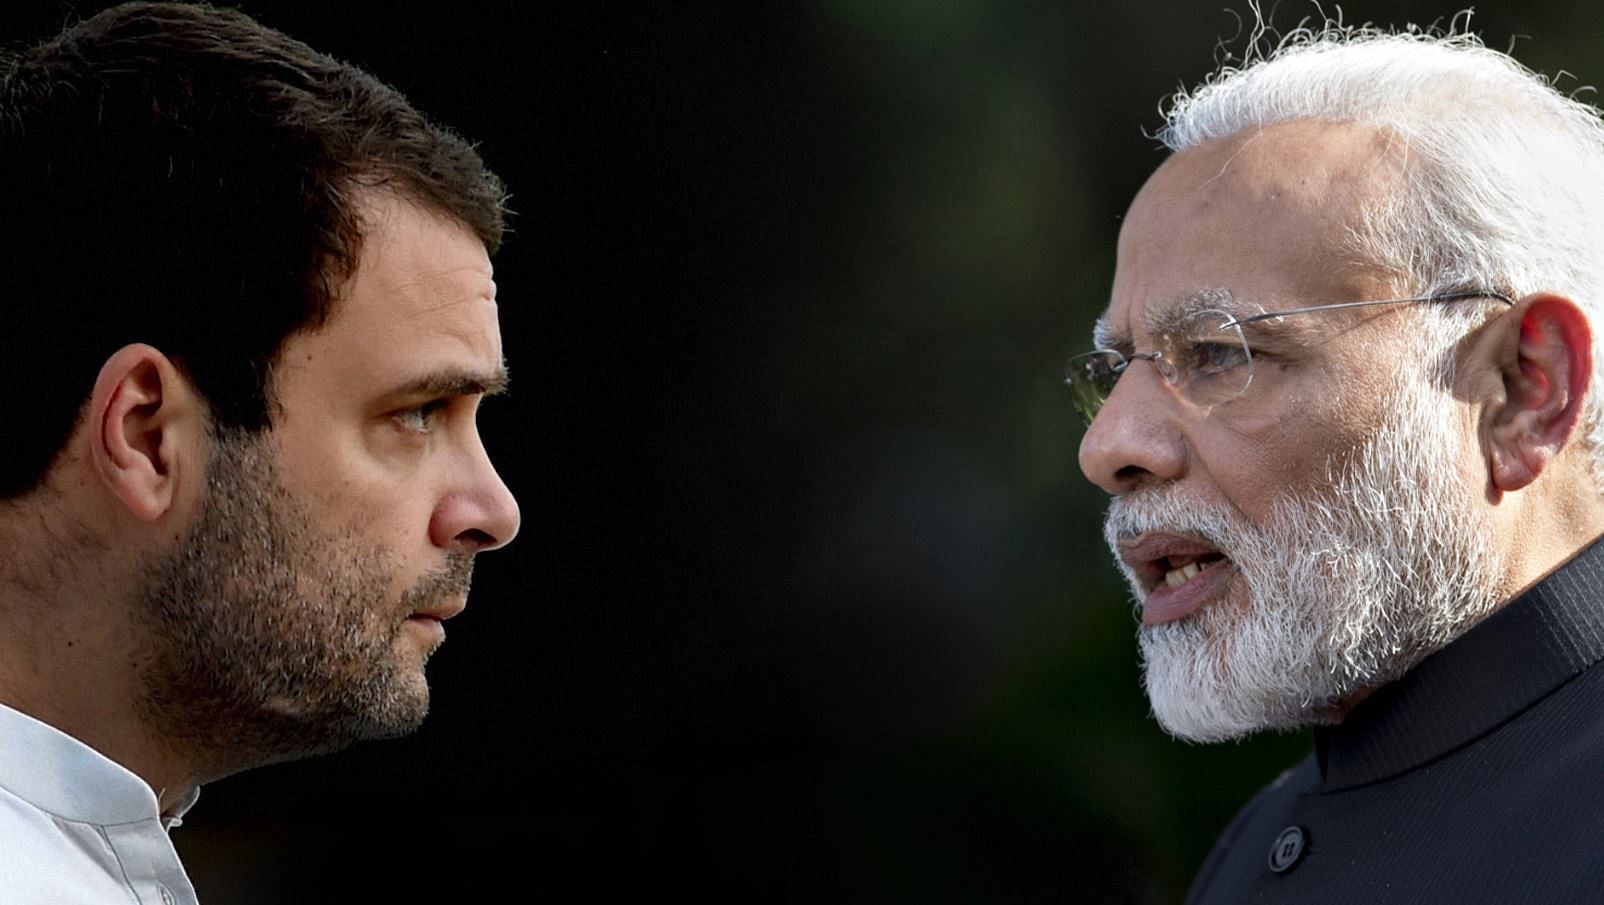 Congress President Rahul Gandhi and PM Narendra Modi